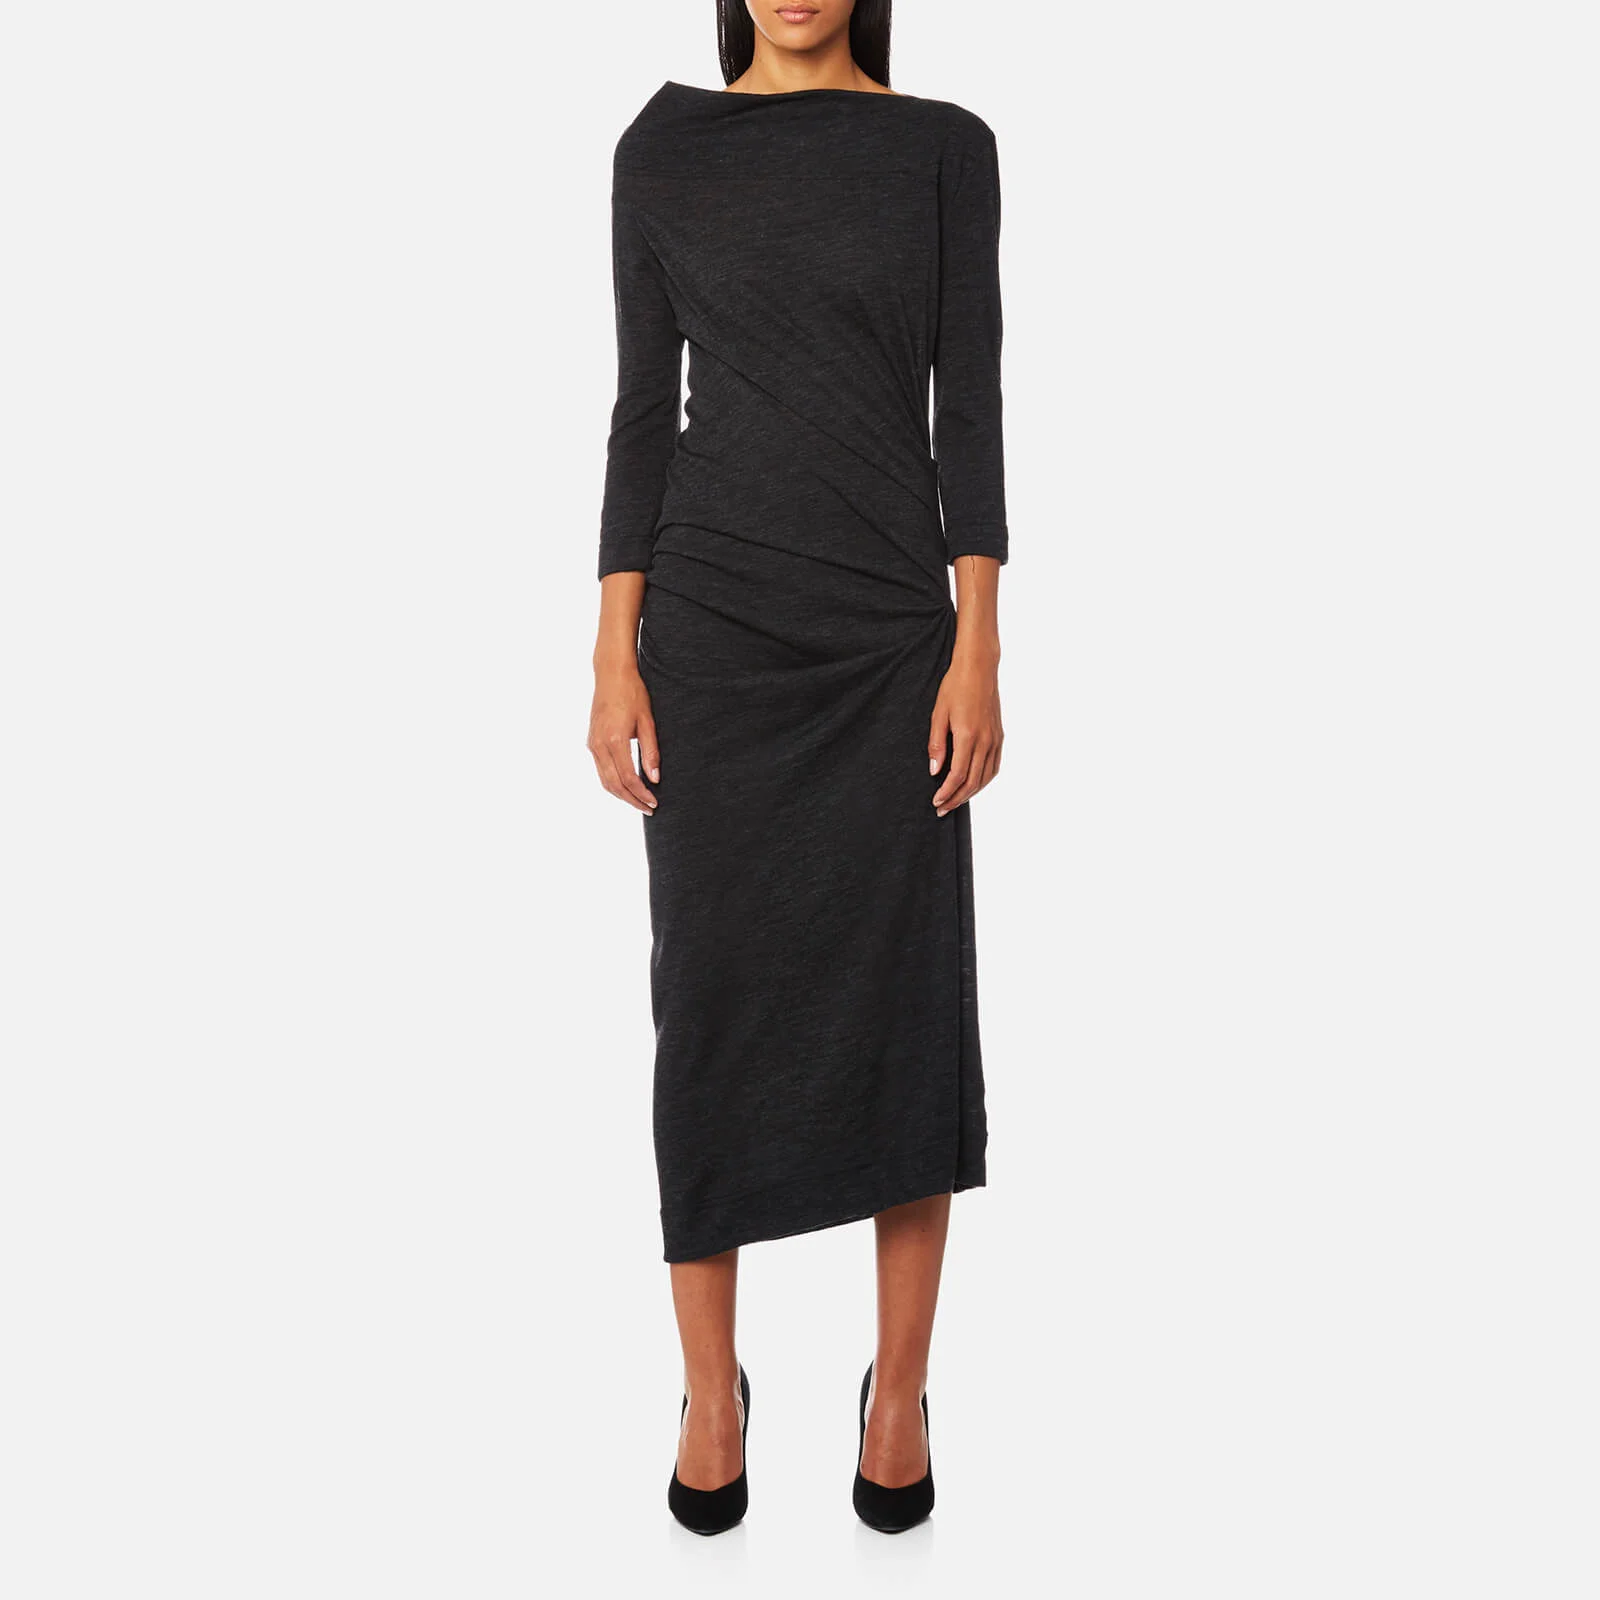 Vivienne Westwood Anglomania Women's Taxa Jersey Dress - Grey Image 1